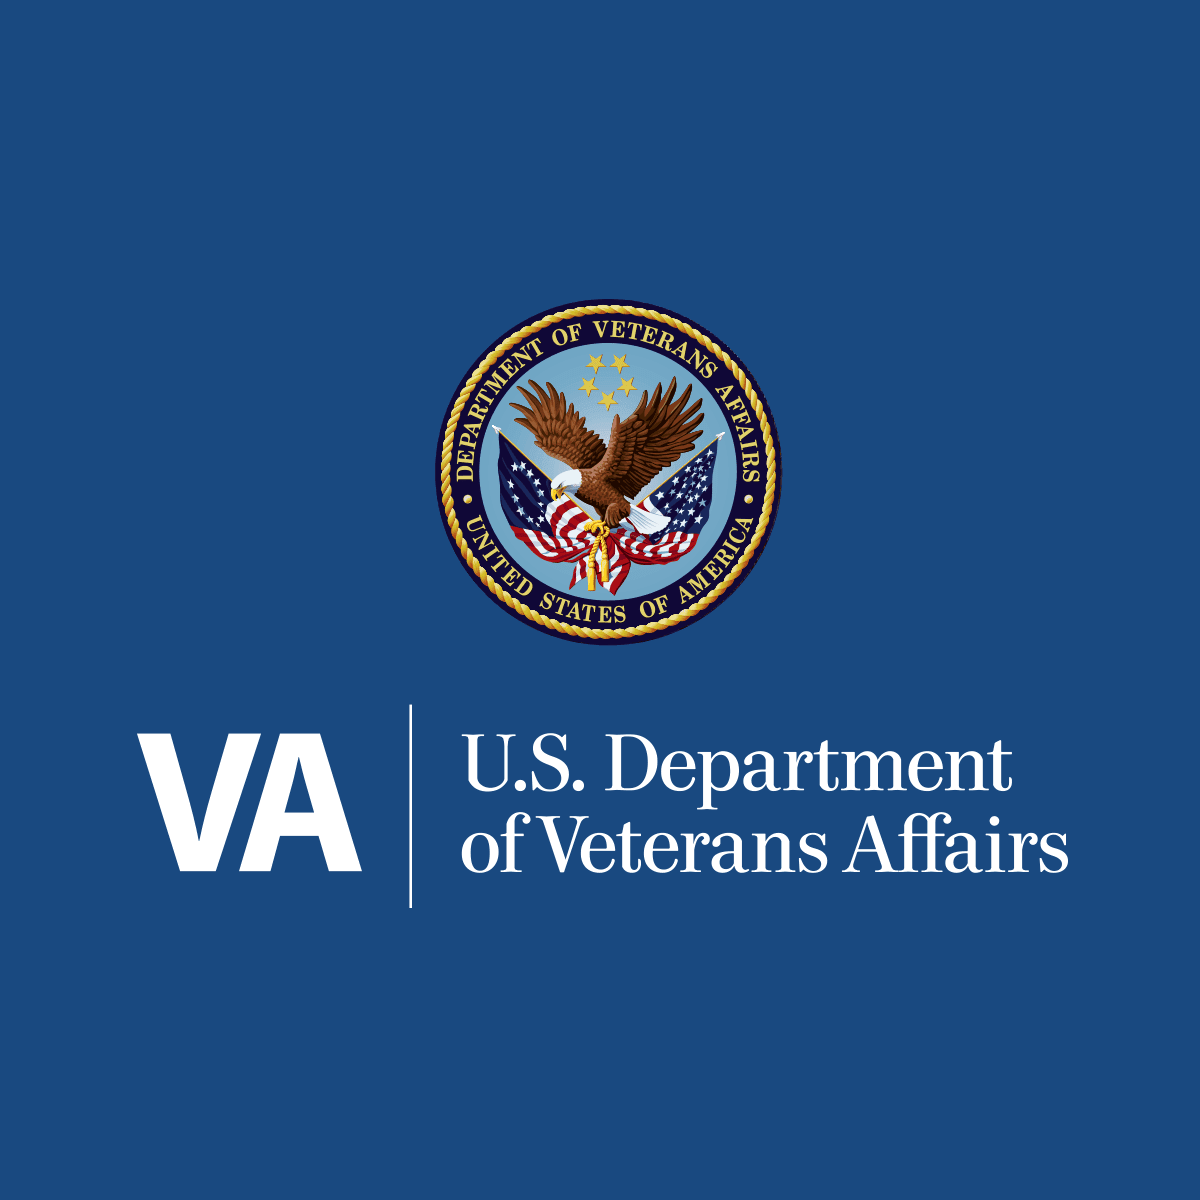 Veterans Day - U.S. Department of Veterans Affairs